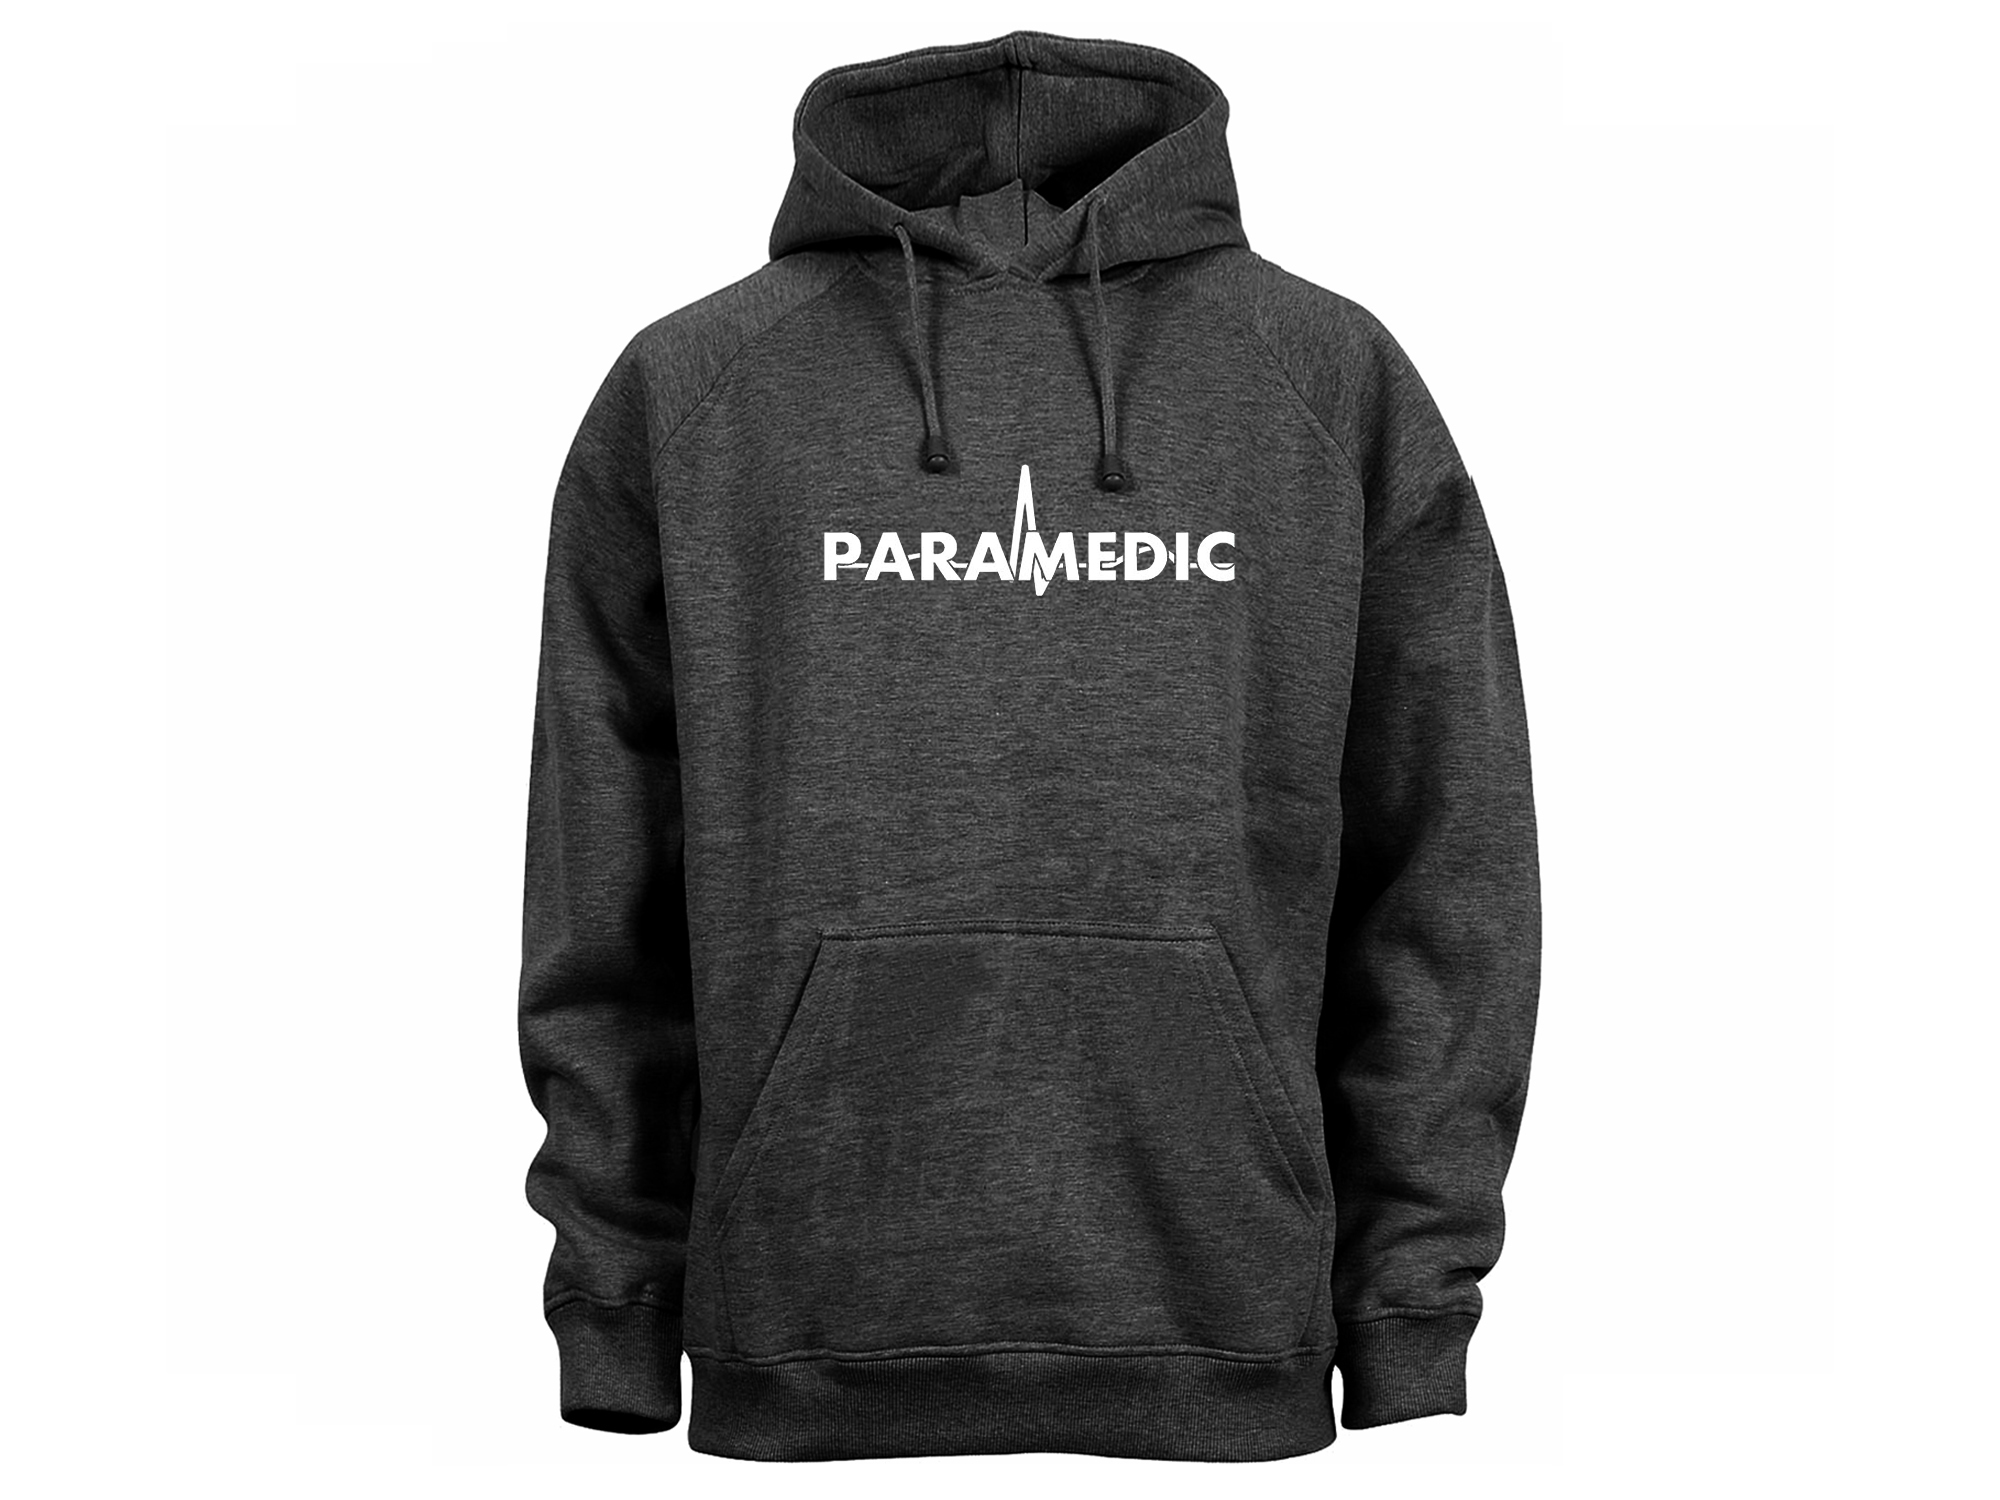 Paramedic medic sweatshirt gray hoodie